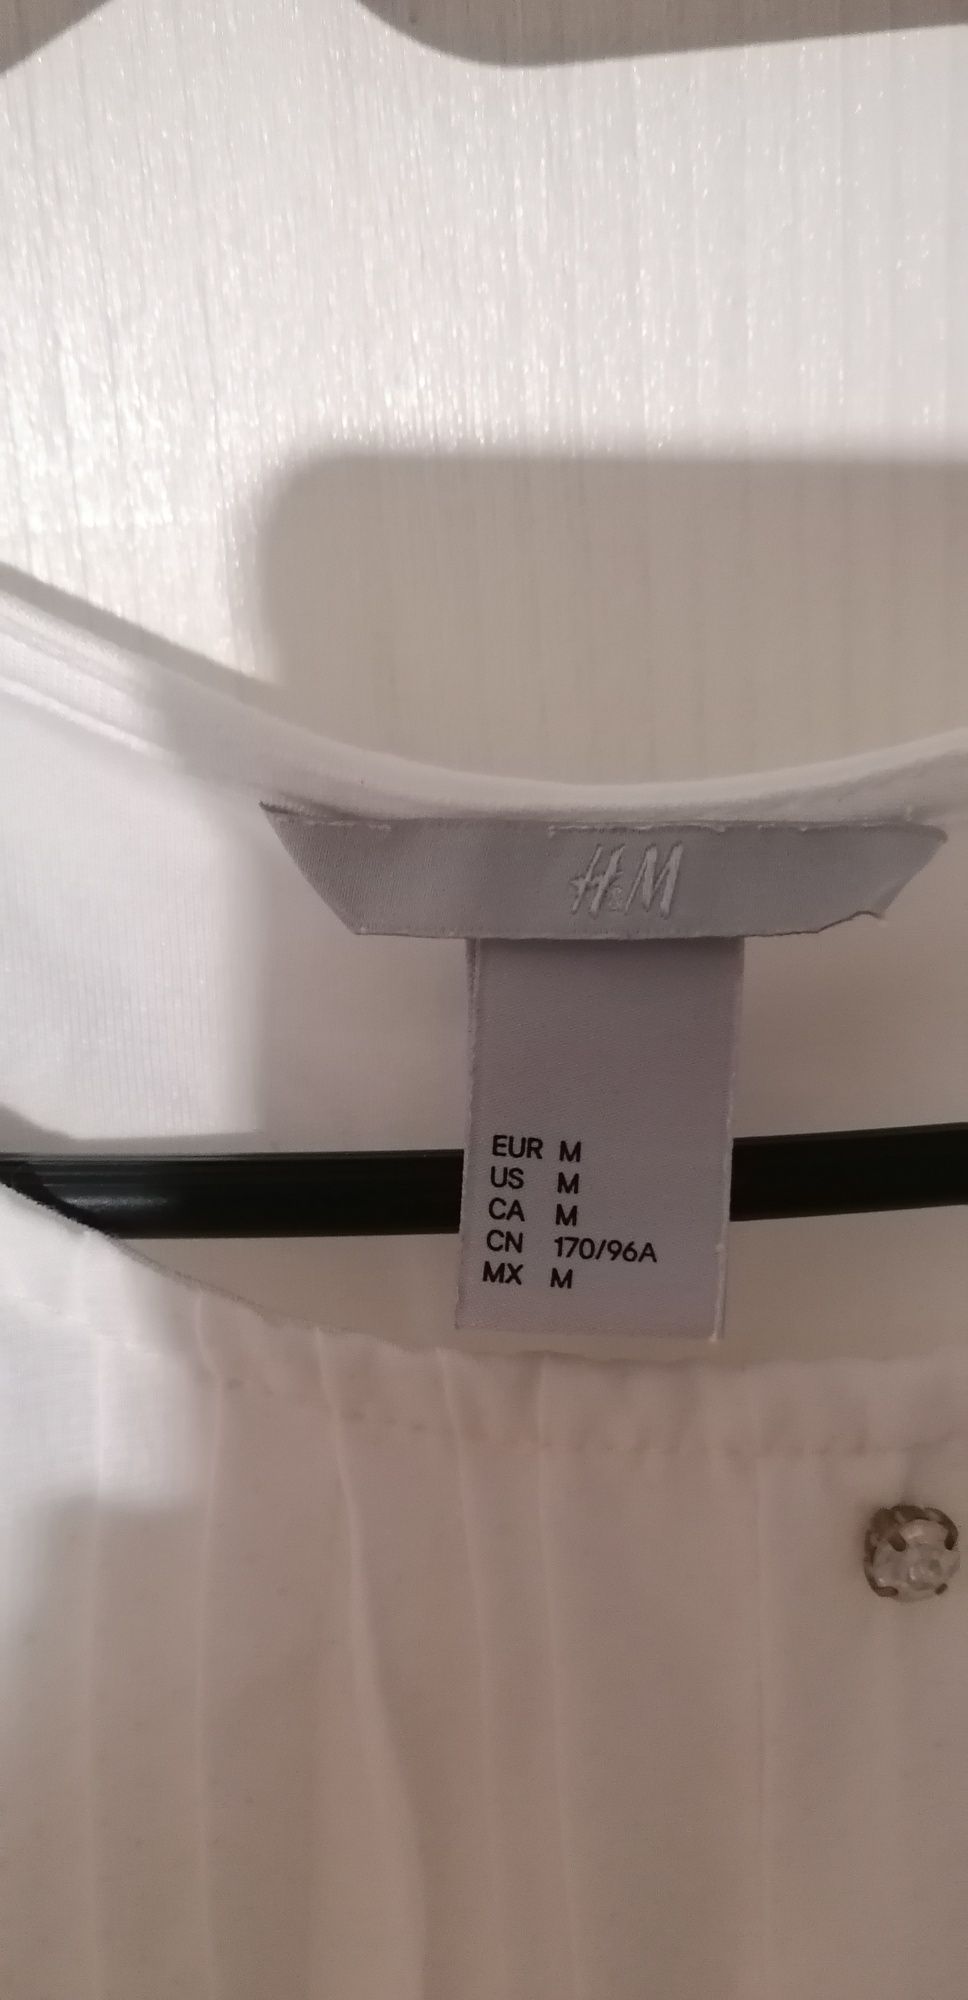 Biała bluzka firmy H&M